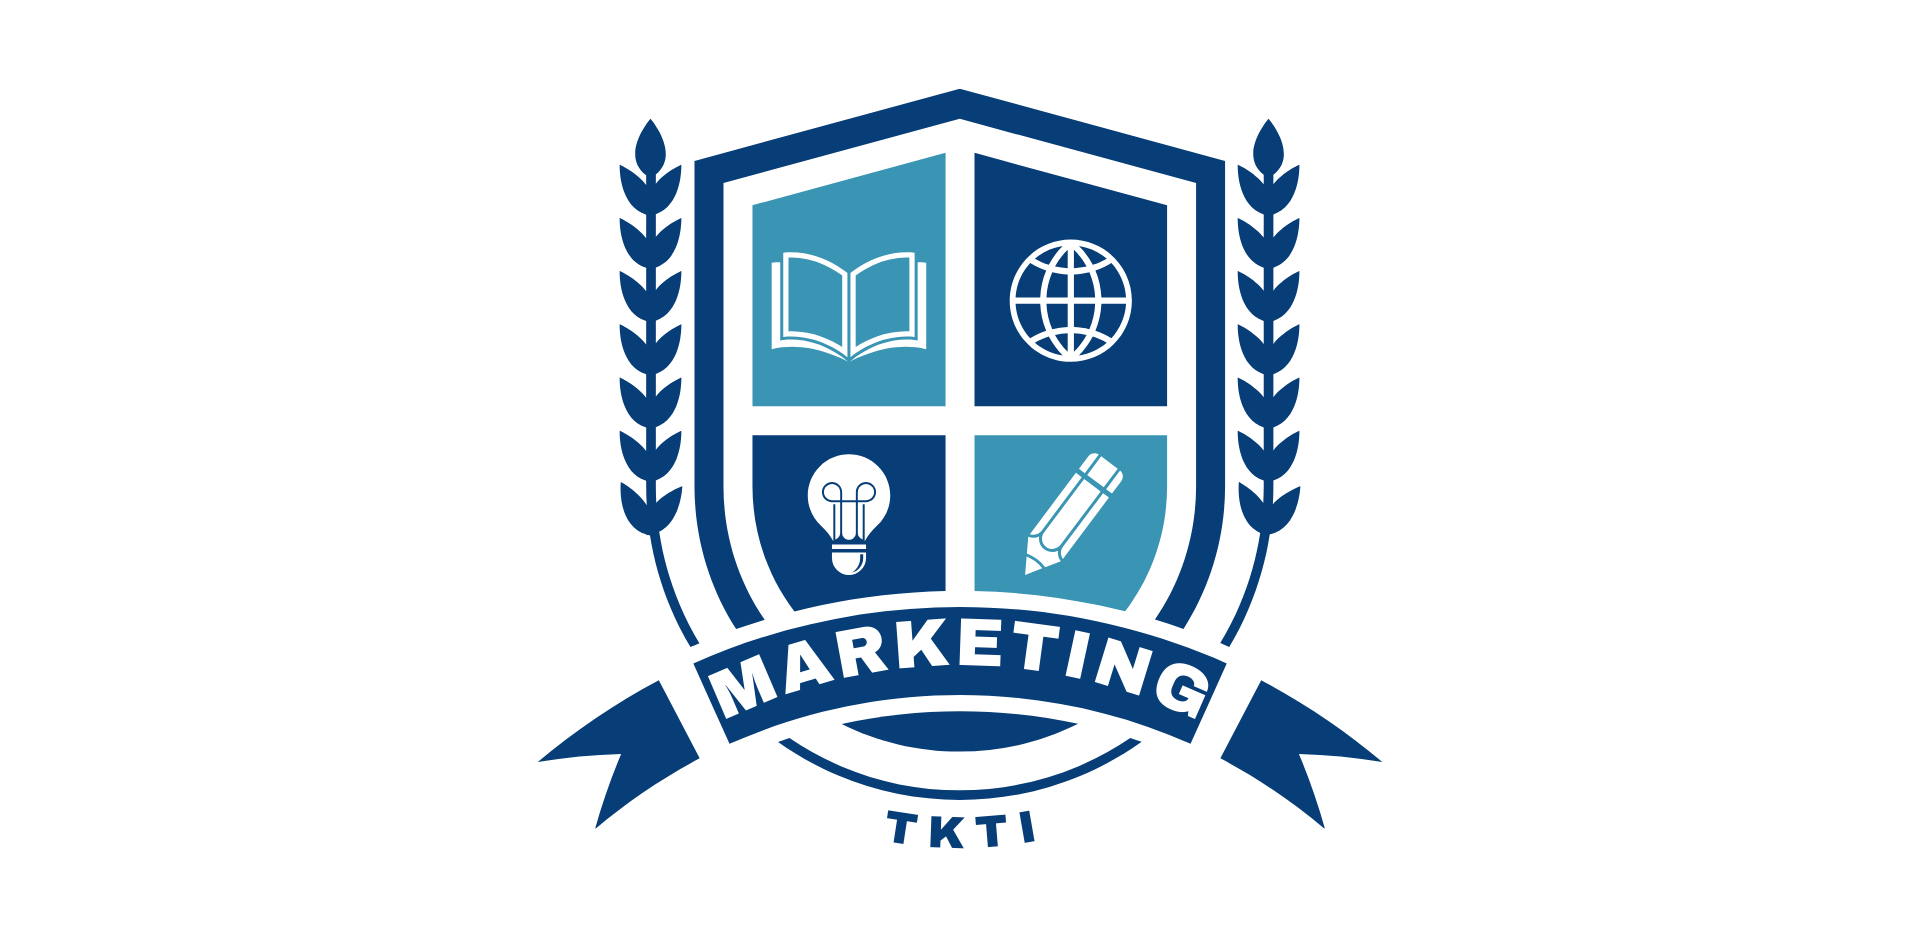 Department of marketing, practice and professional education | tkti.uz